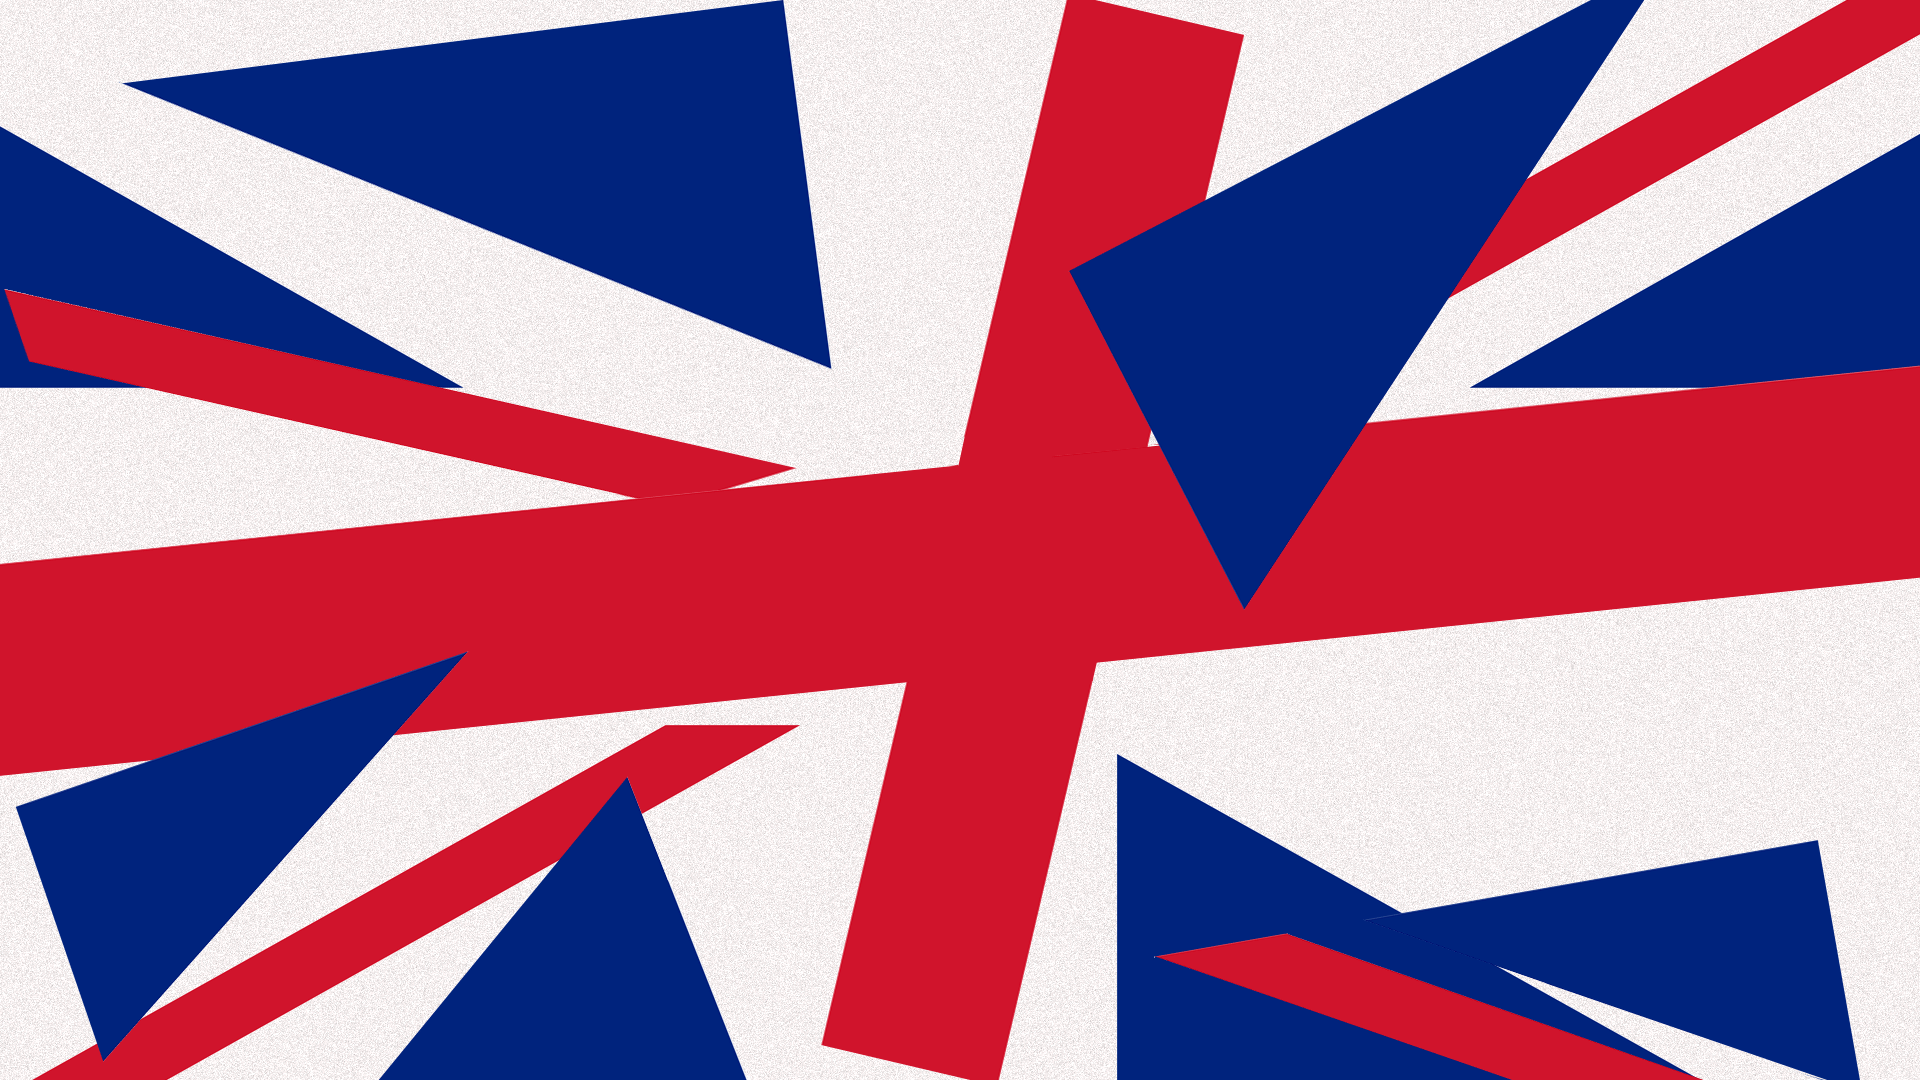 A British flag falling apart